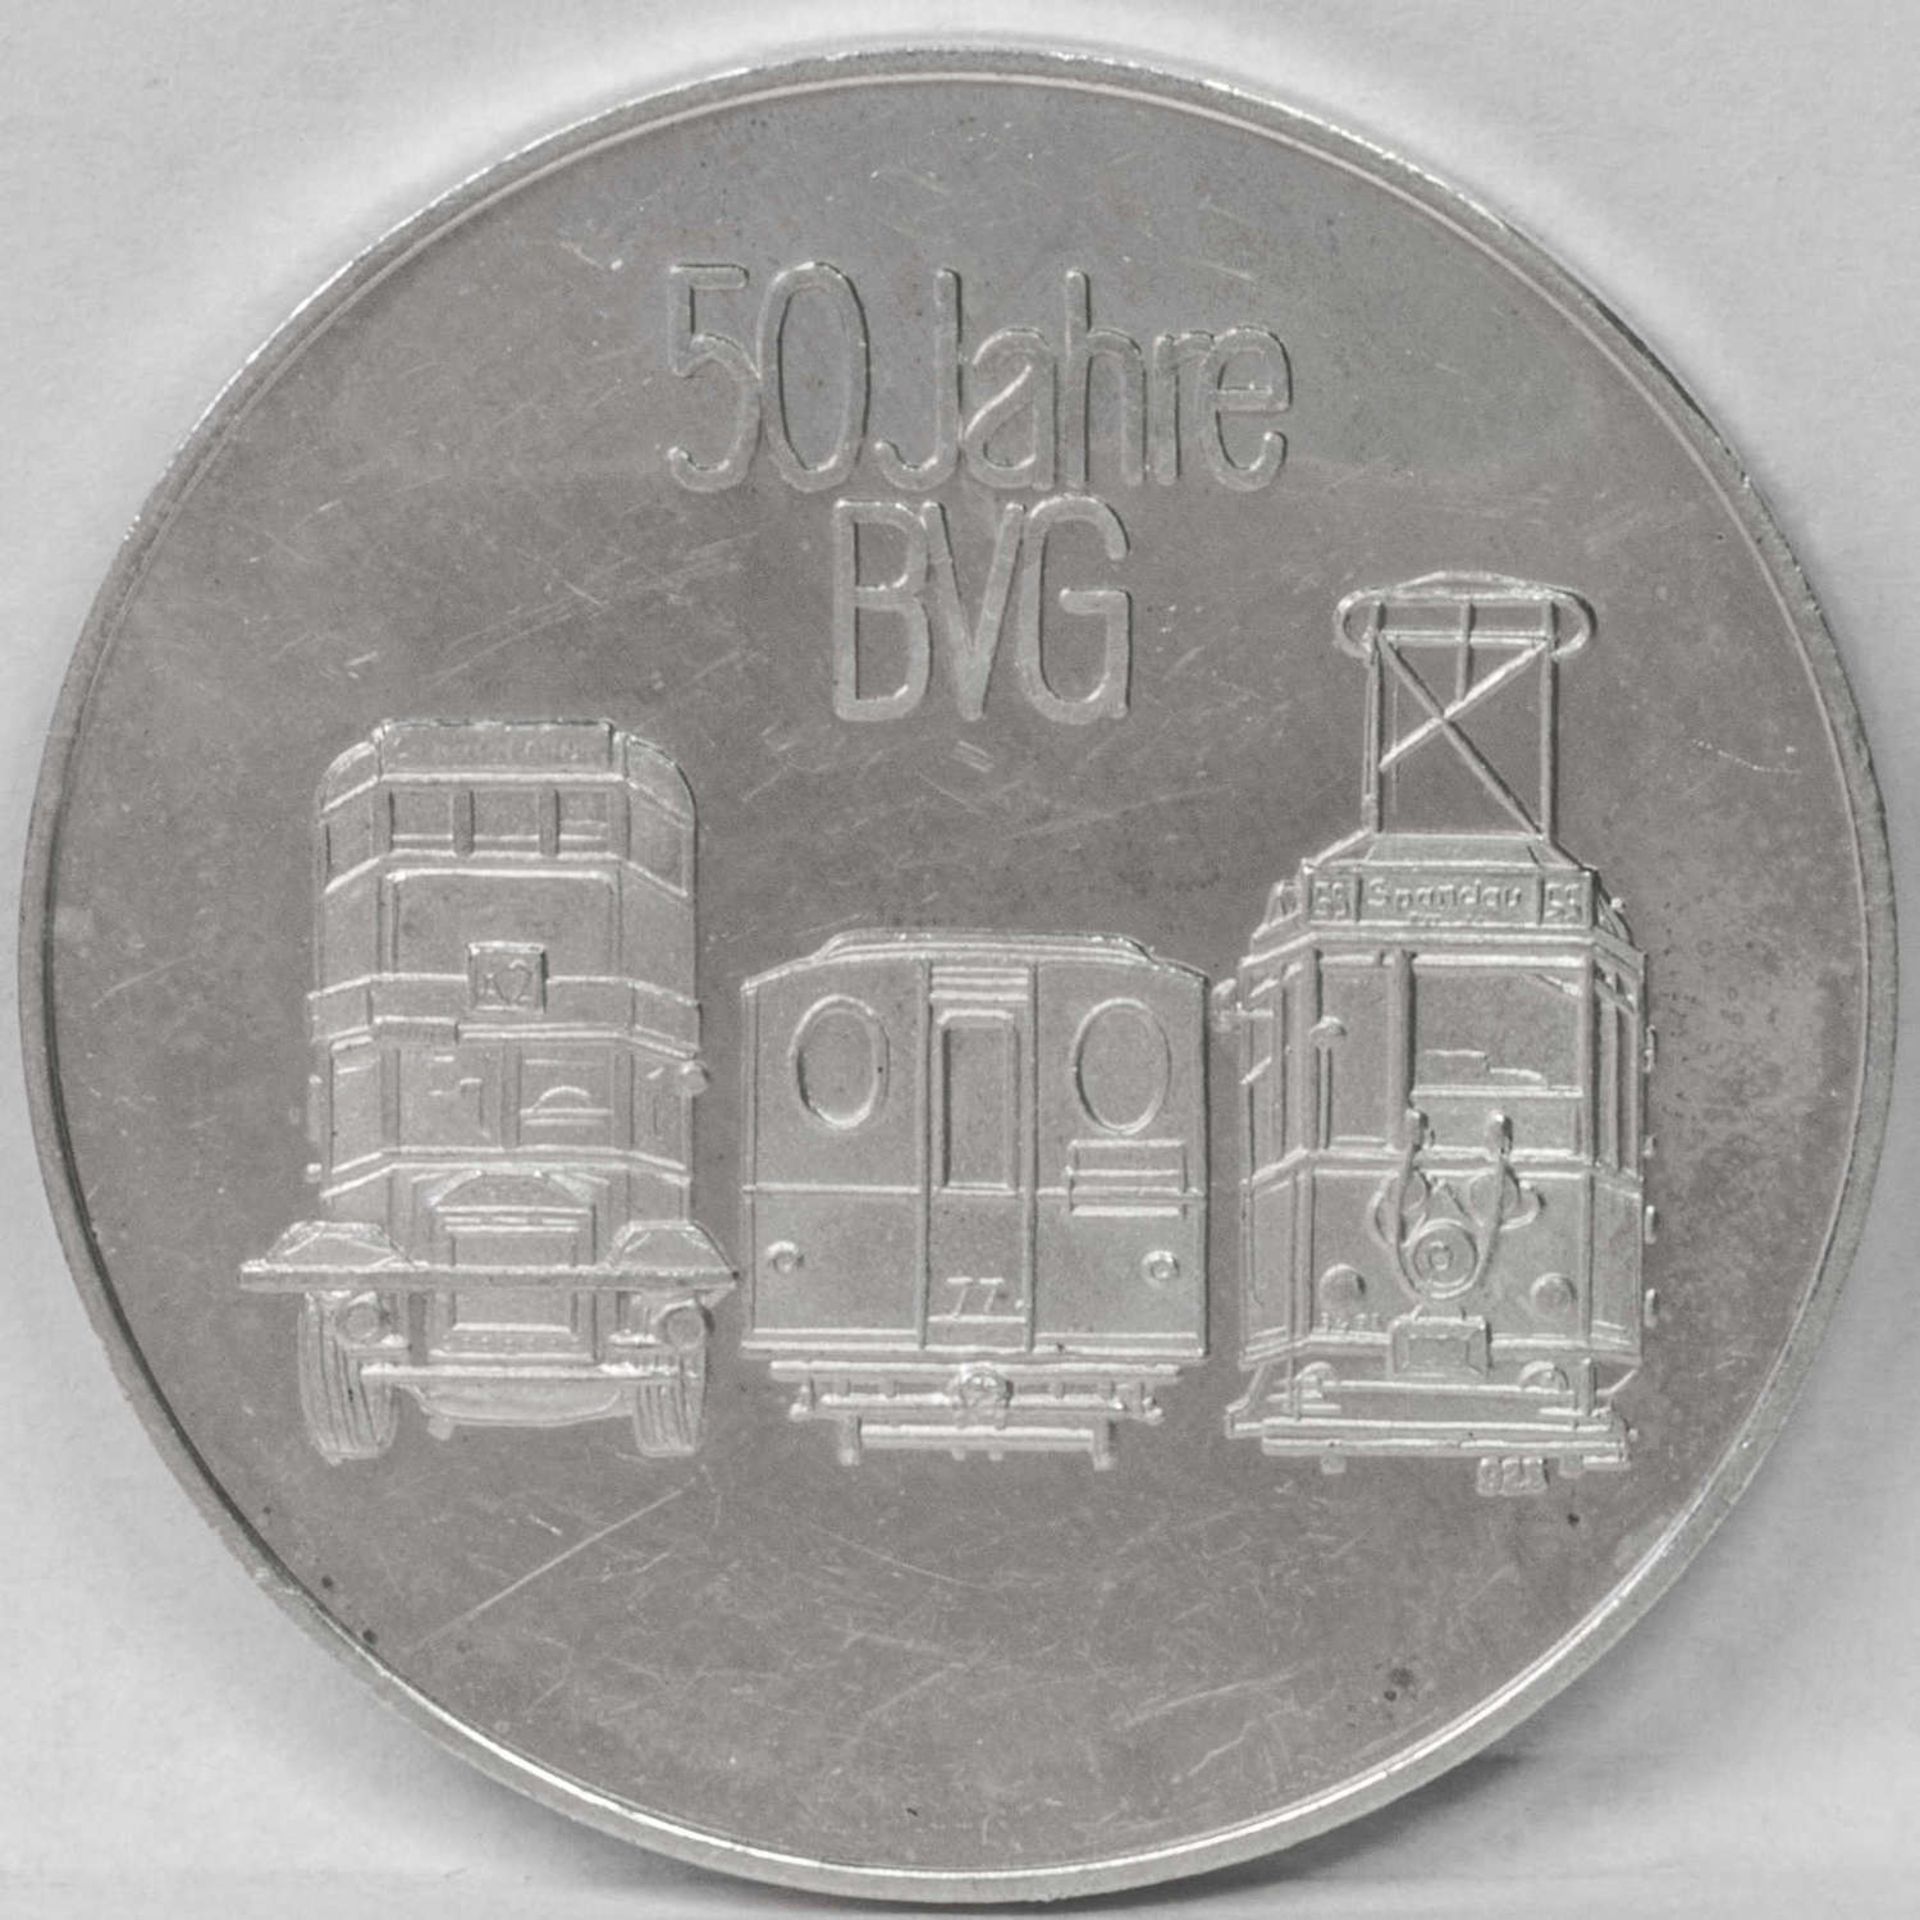 Silbermedaille "50 Jahre Berliner Verkehrsbetriebe". Gewicht: ca. 23 g. Durchmesser: ca. 40 mm.